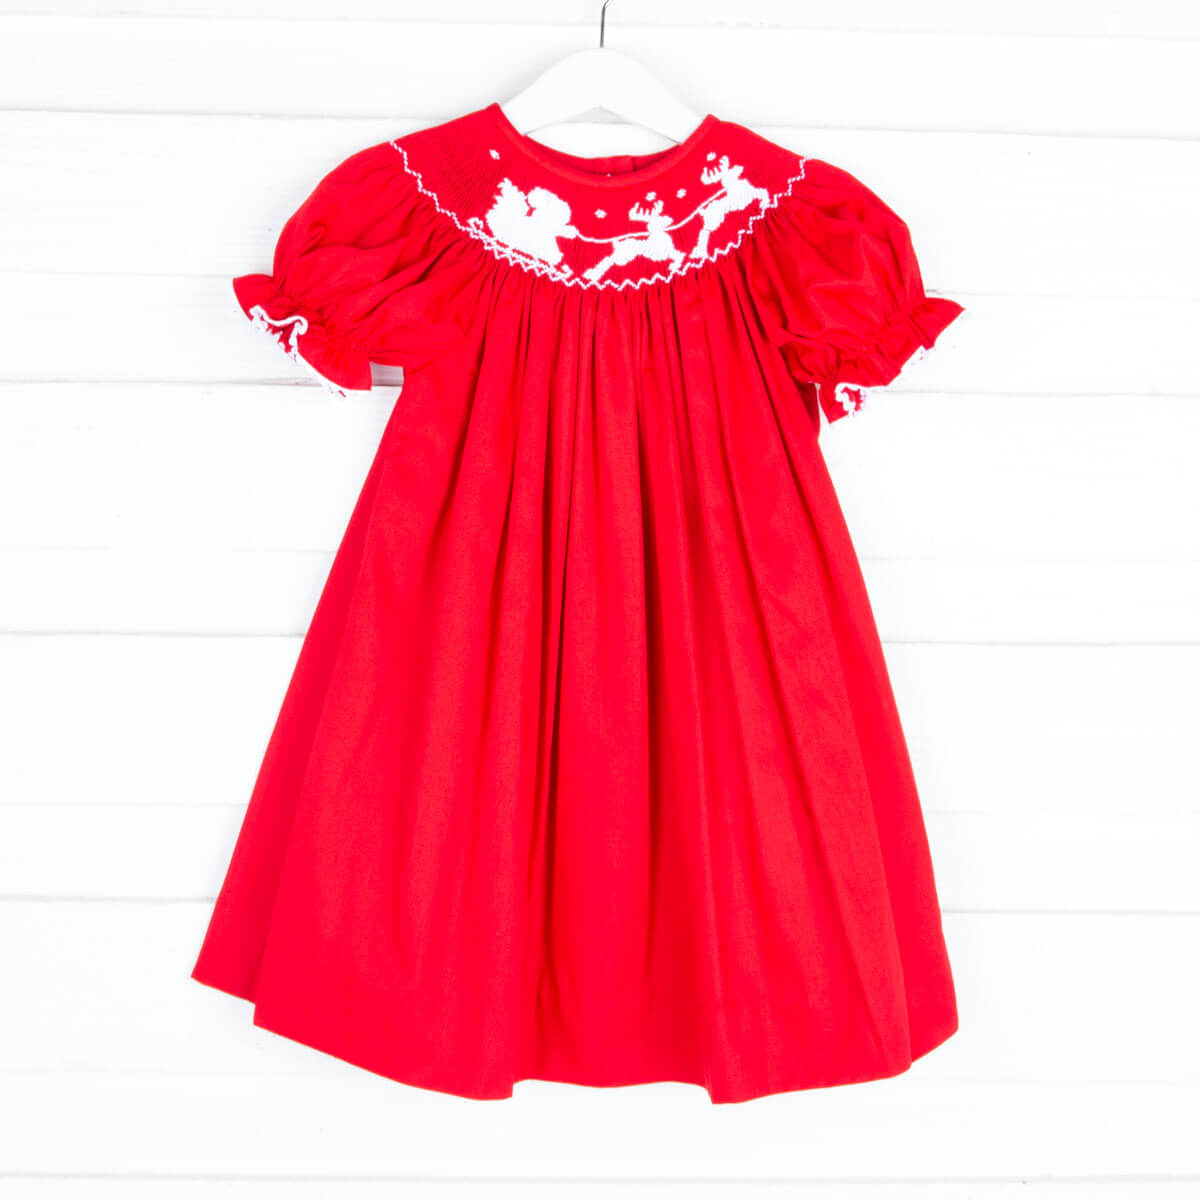 Smocked Santa's Sleigh Solid Red Bishop Dress